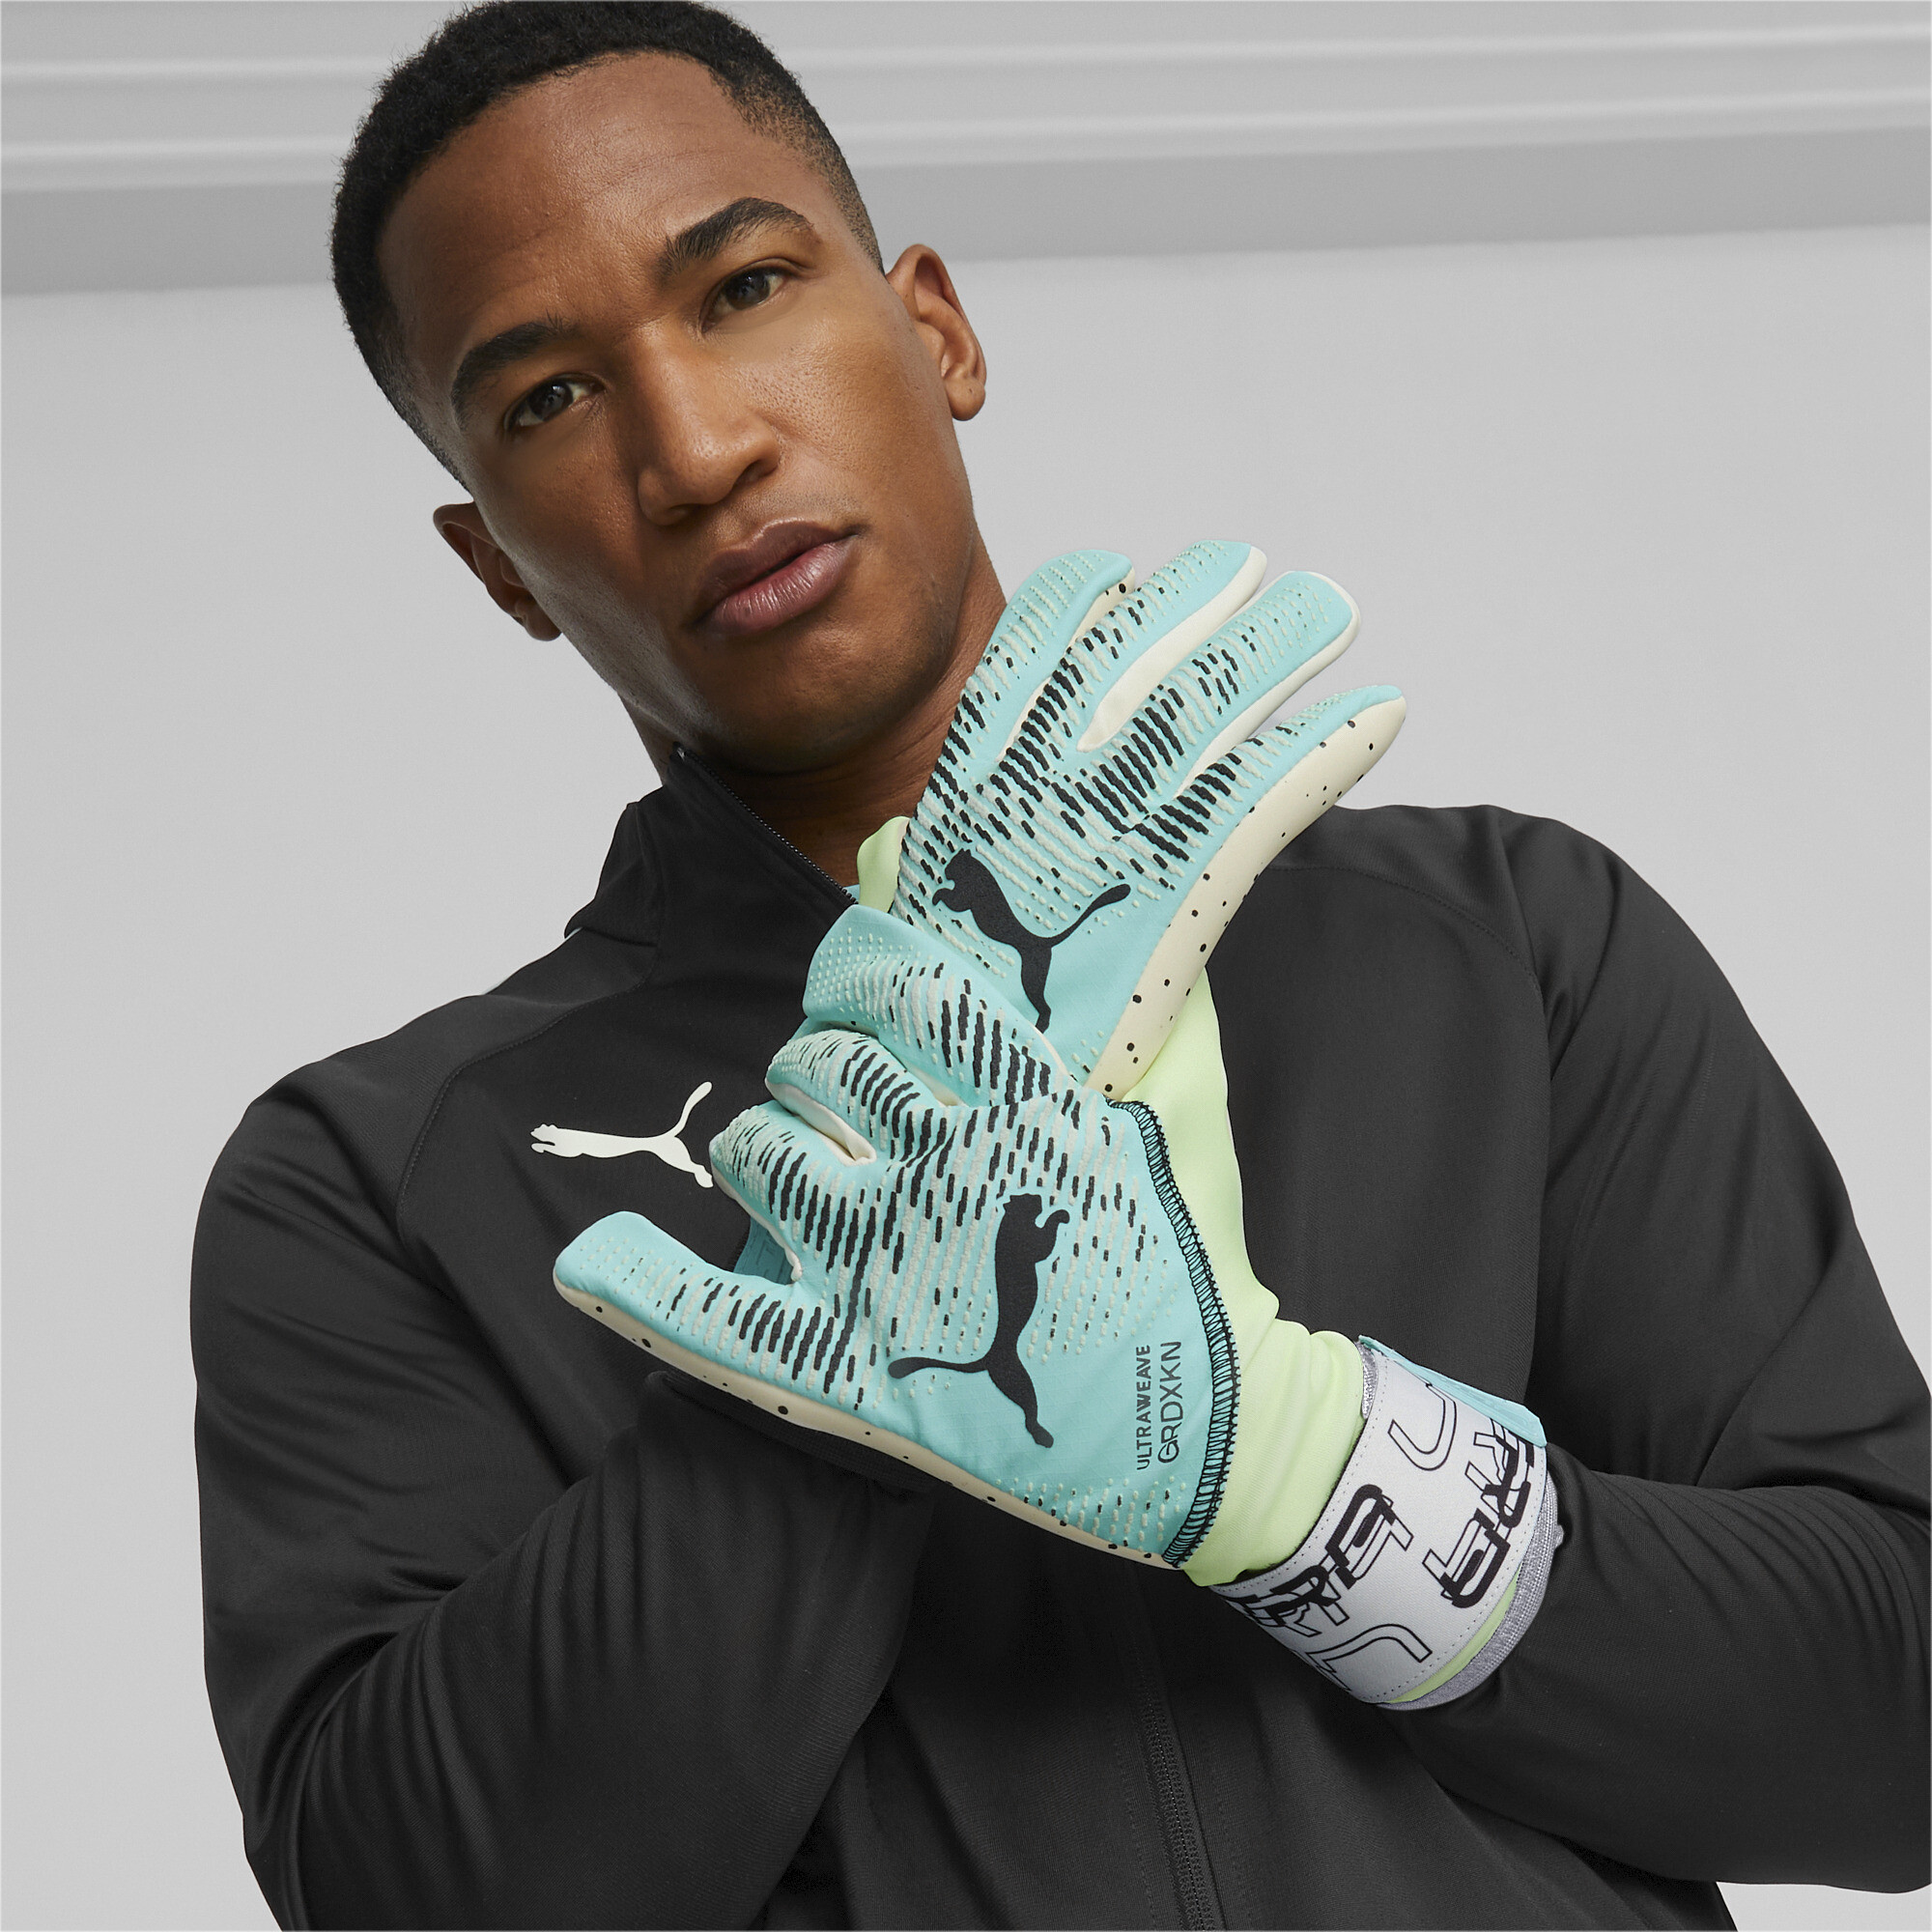 Puma ULTRA Ultimate 1 Negative Cut Football Goalkeeper's Gloves, Green, Size 8, Accessories